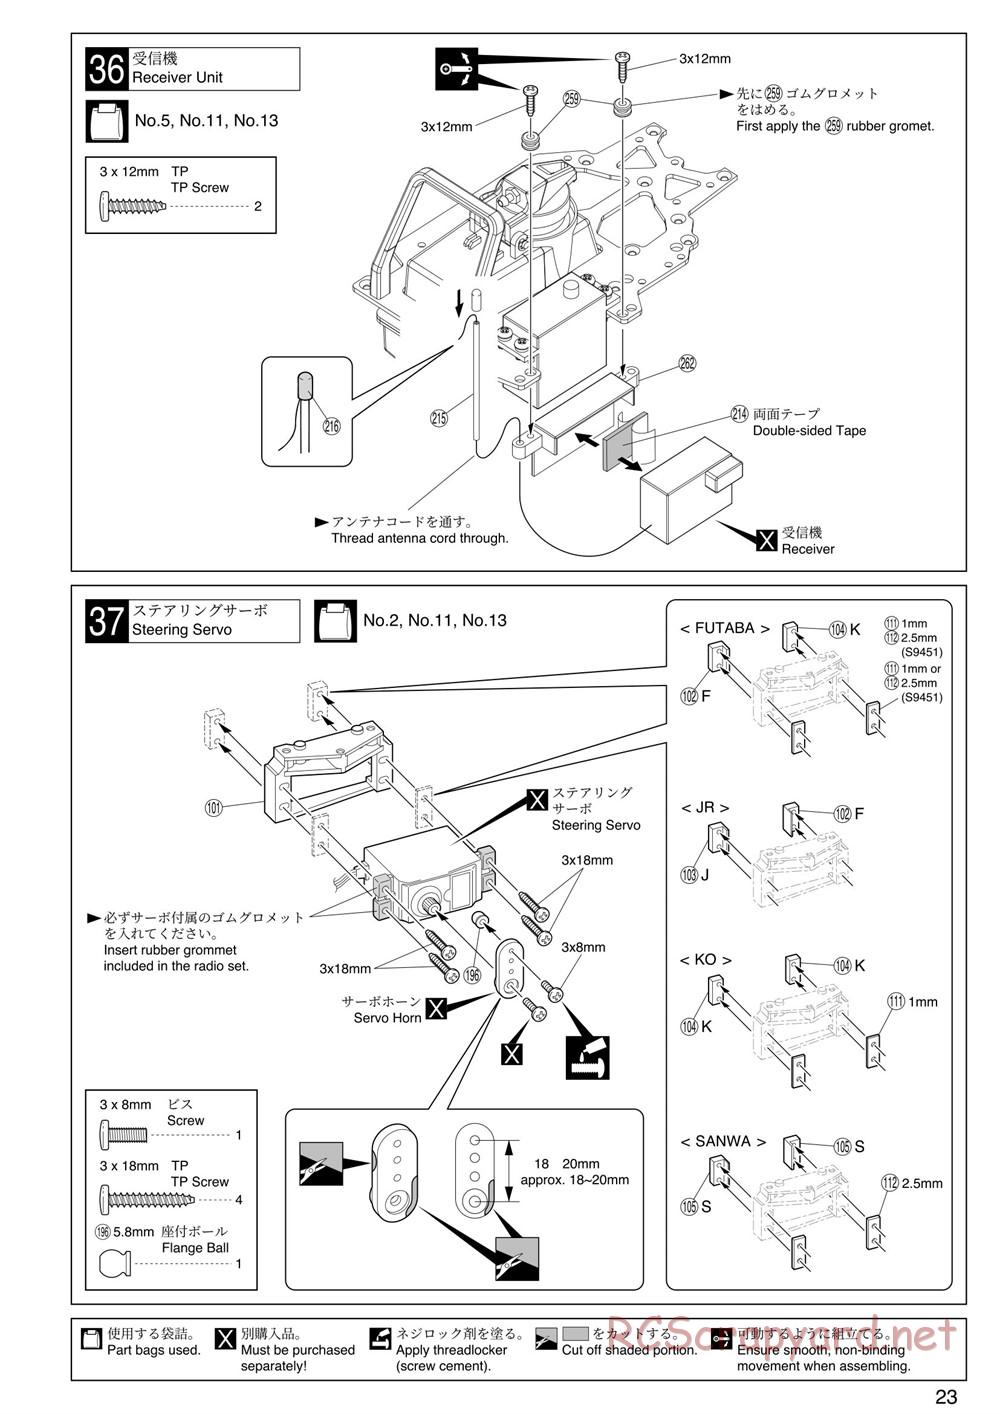 Kyosho - V-One RRR Evo - Manual - Page 23